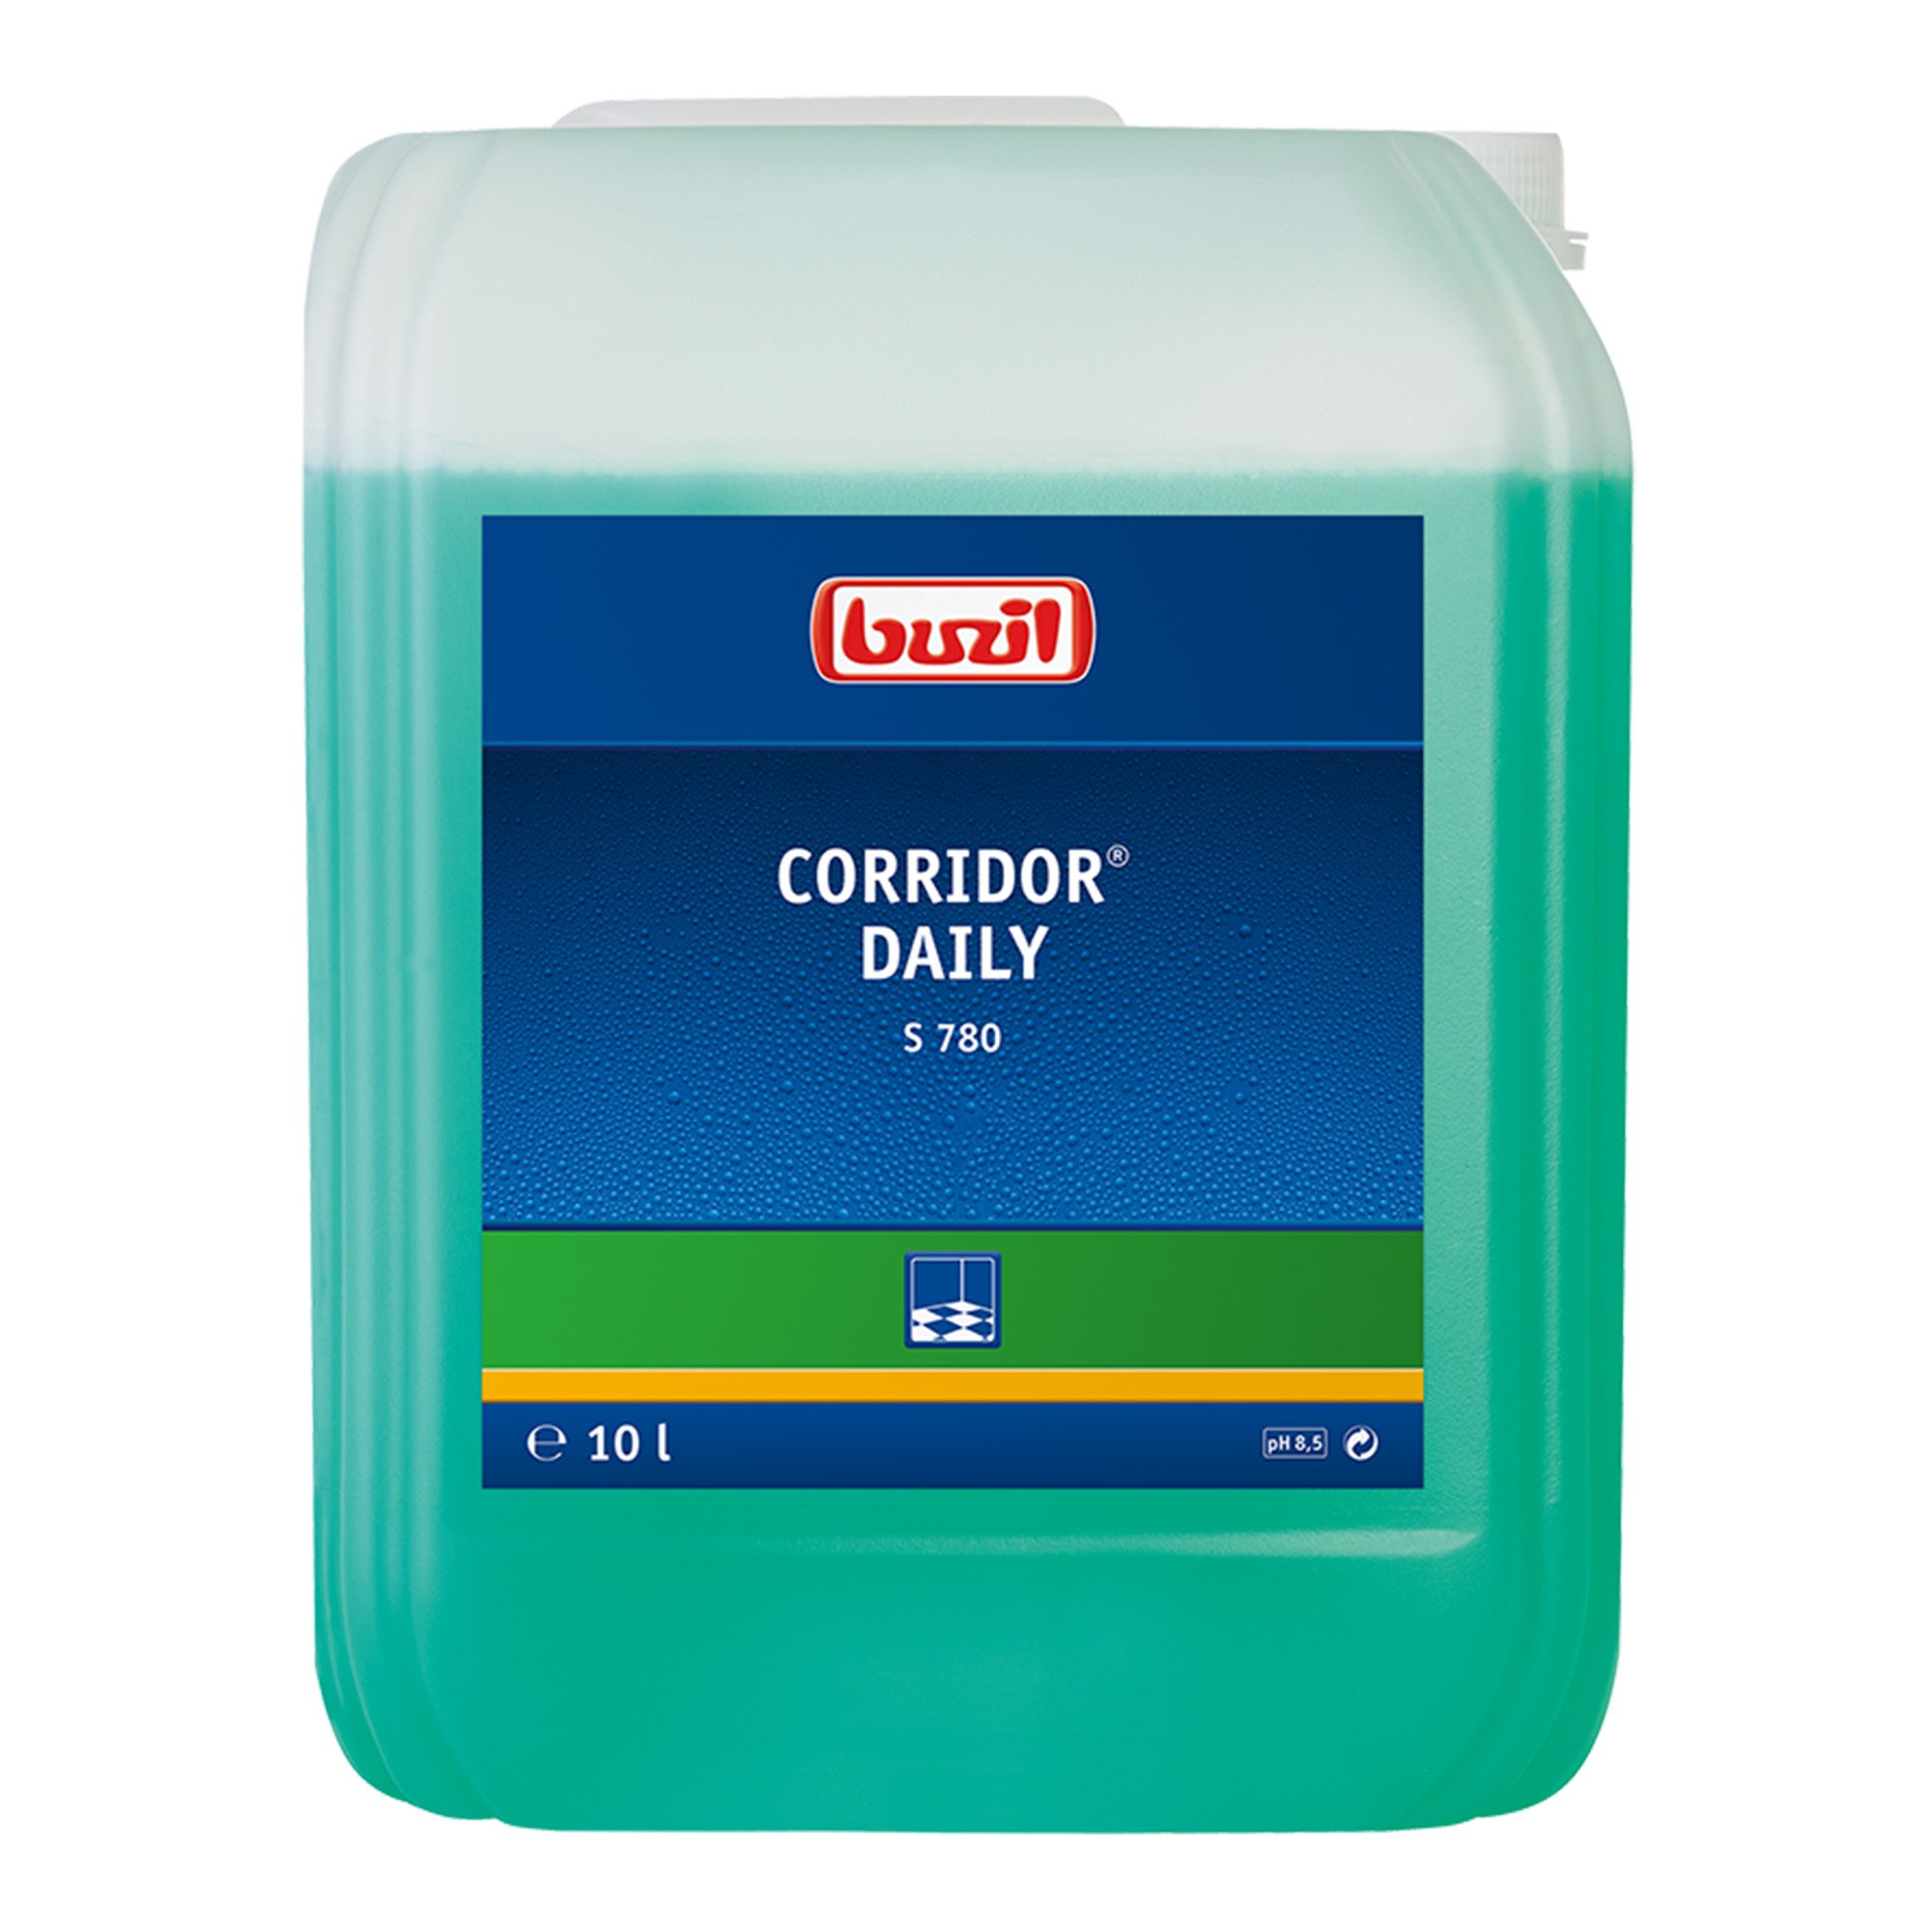 Buzil Corridor Daily S 780 Wischpflege 10 Liter Kanister S780-0010RA_1